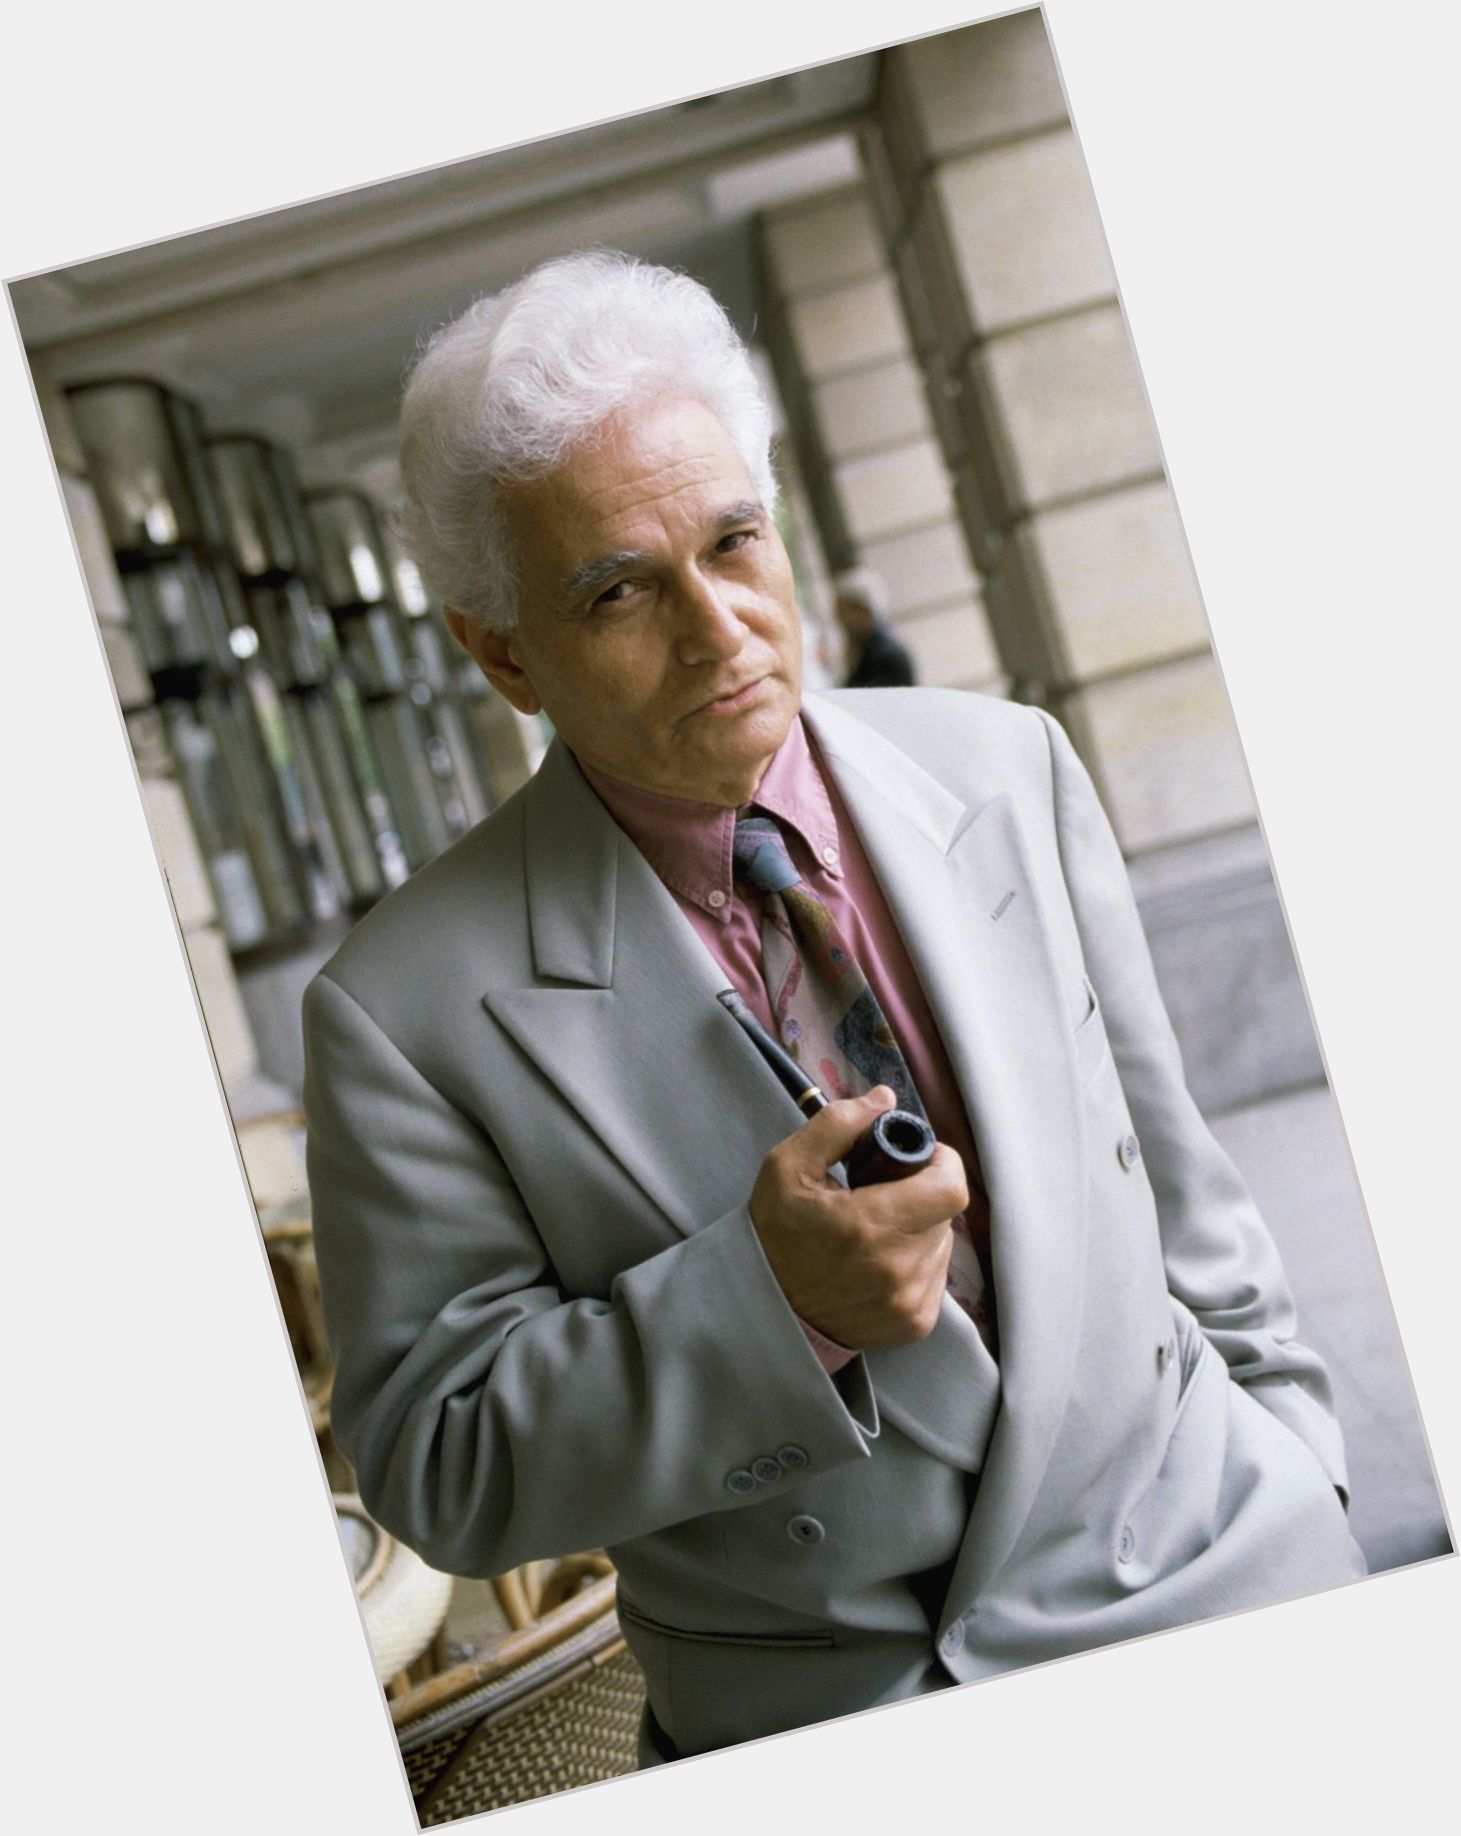 Jacques Derrida hairstyle 4.jpg